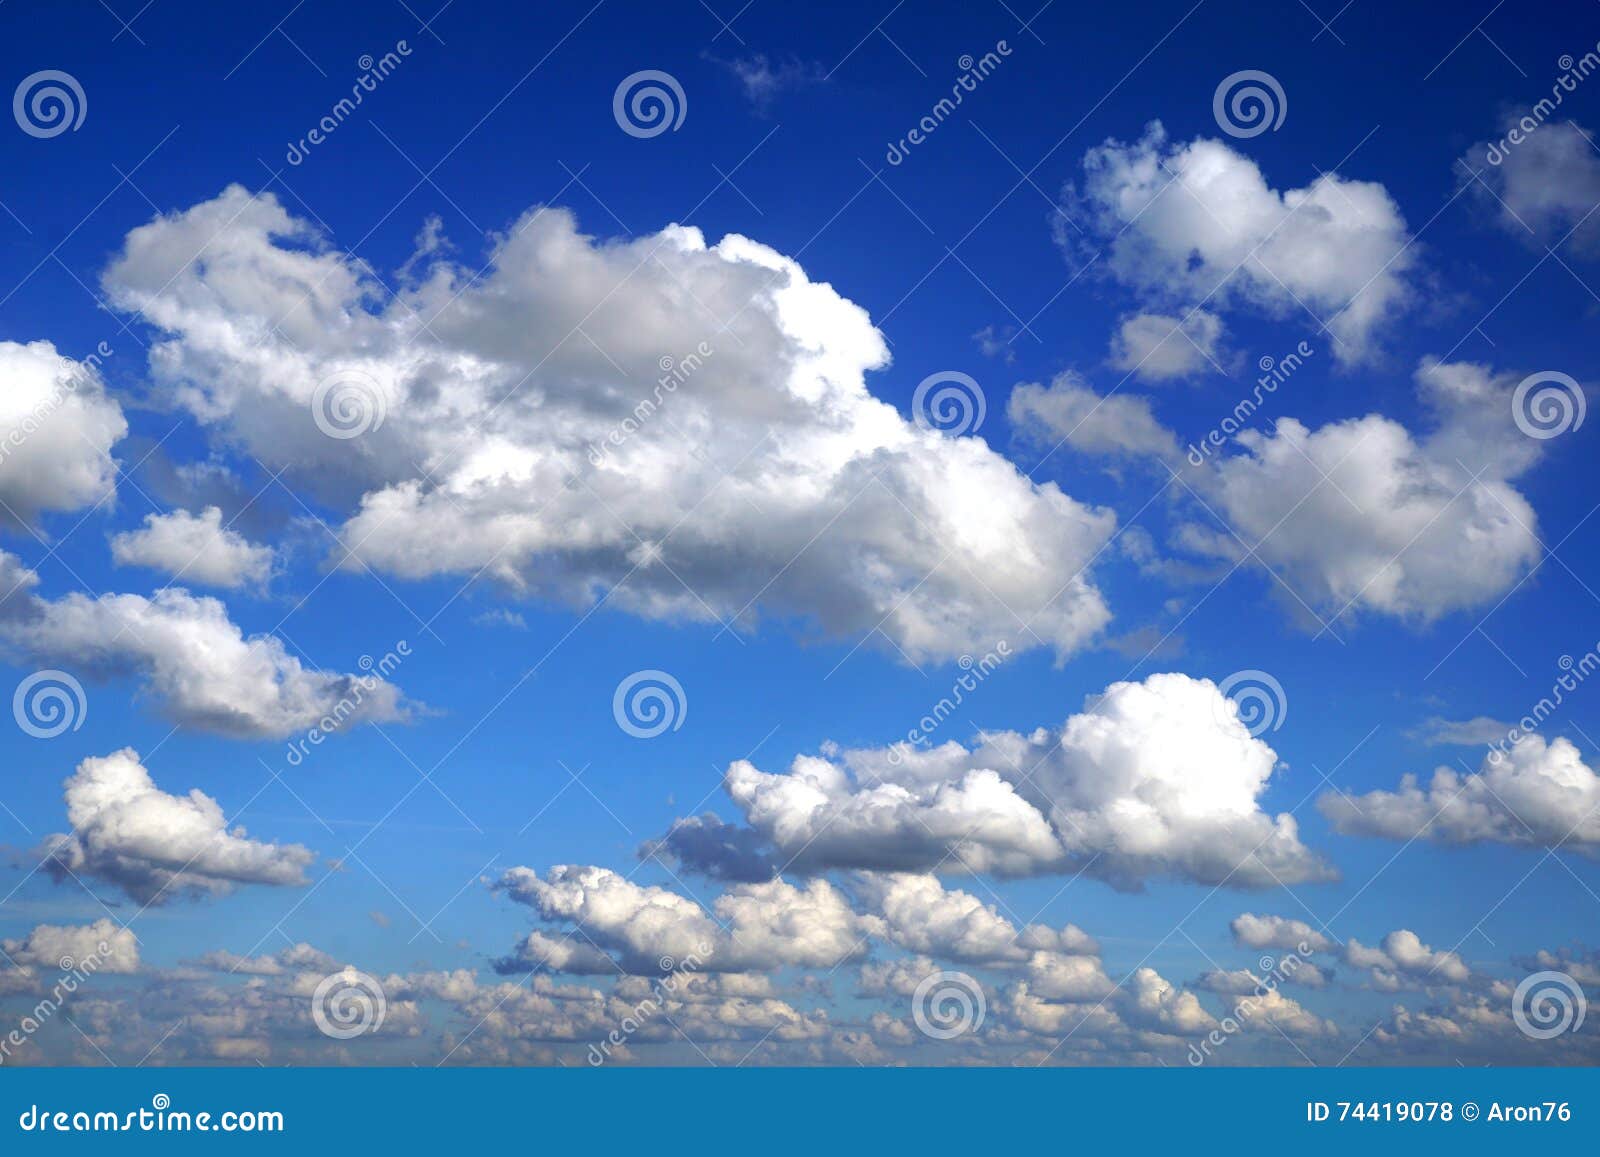 white puffy clouds in blue sky